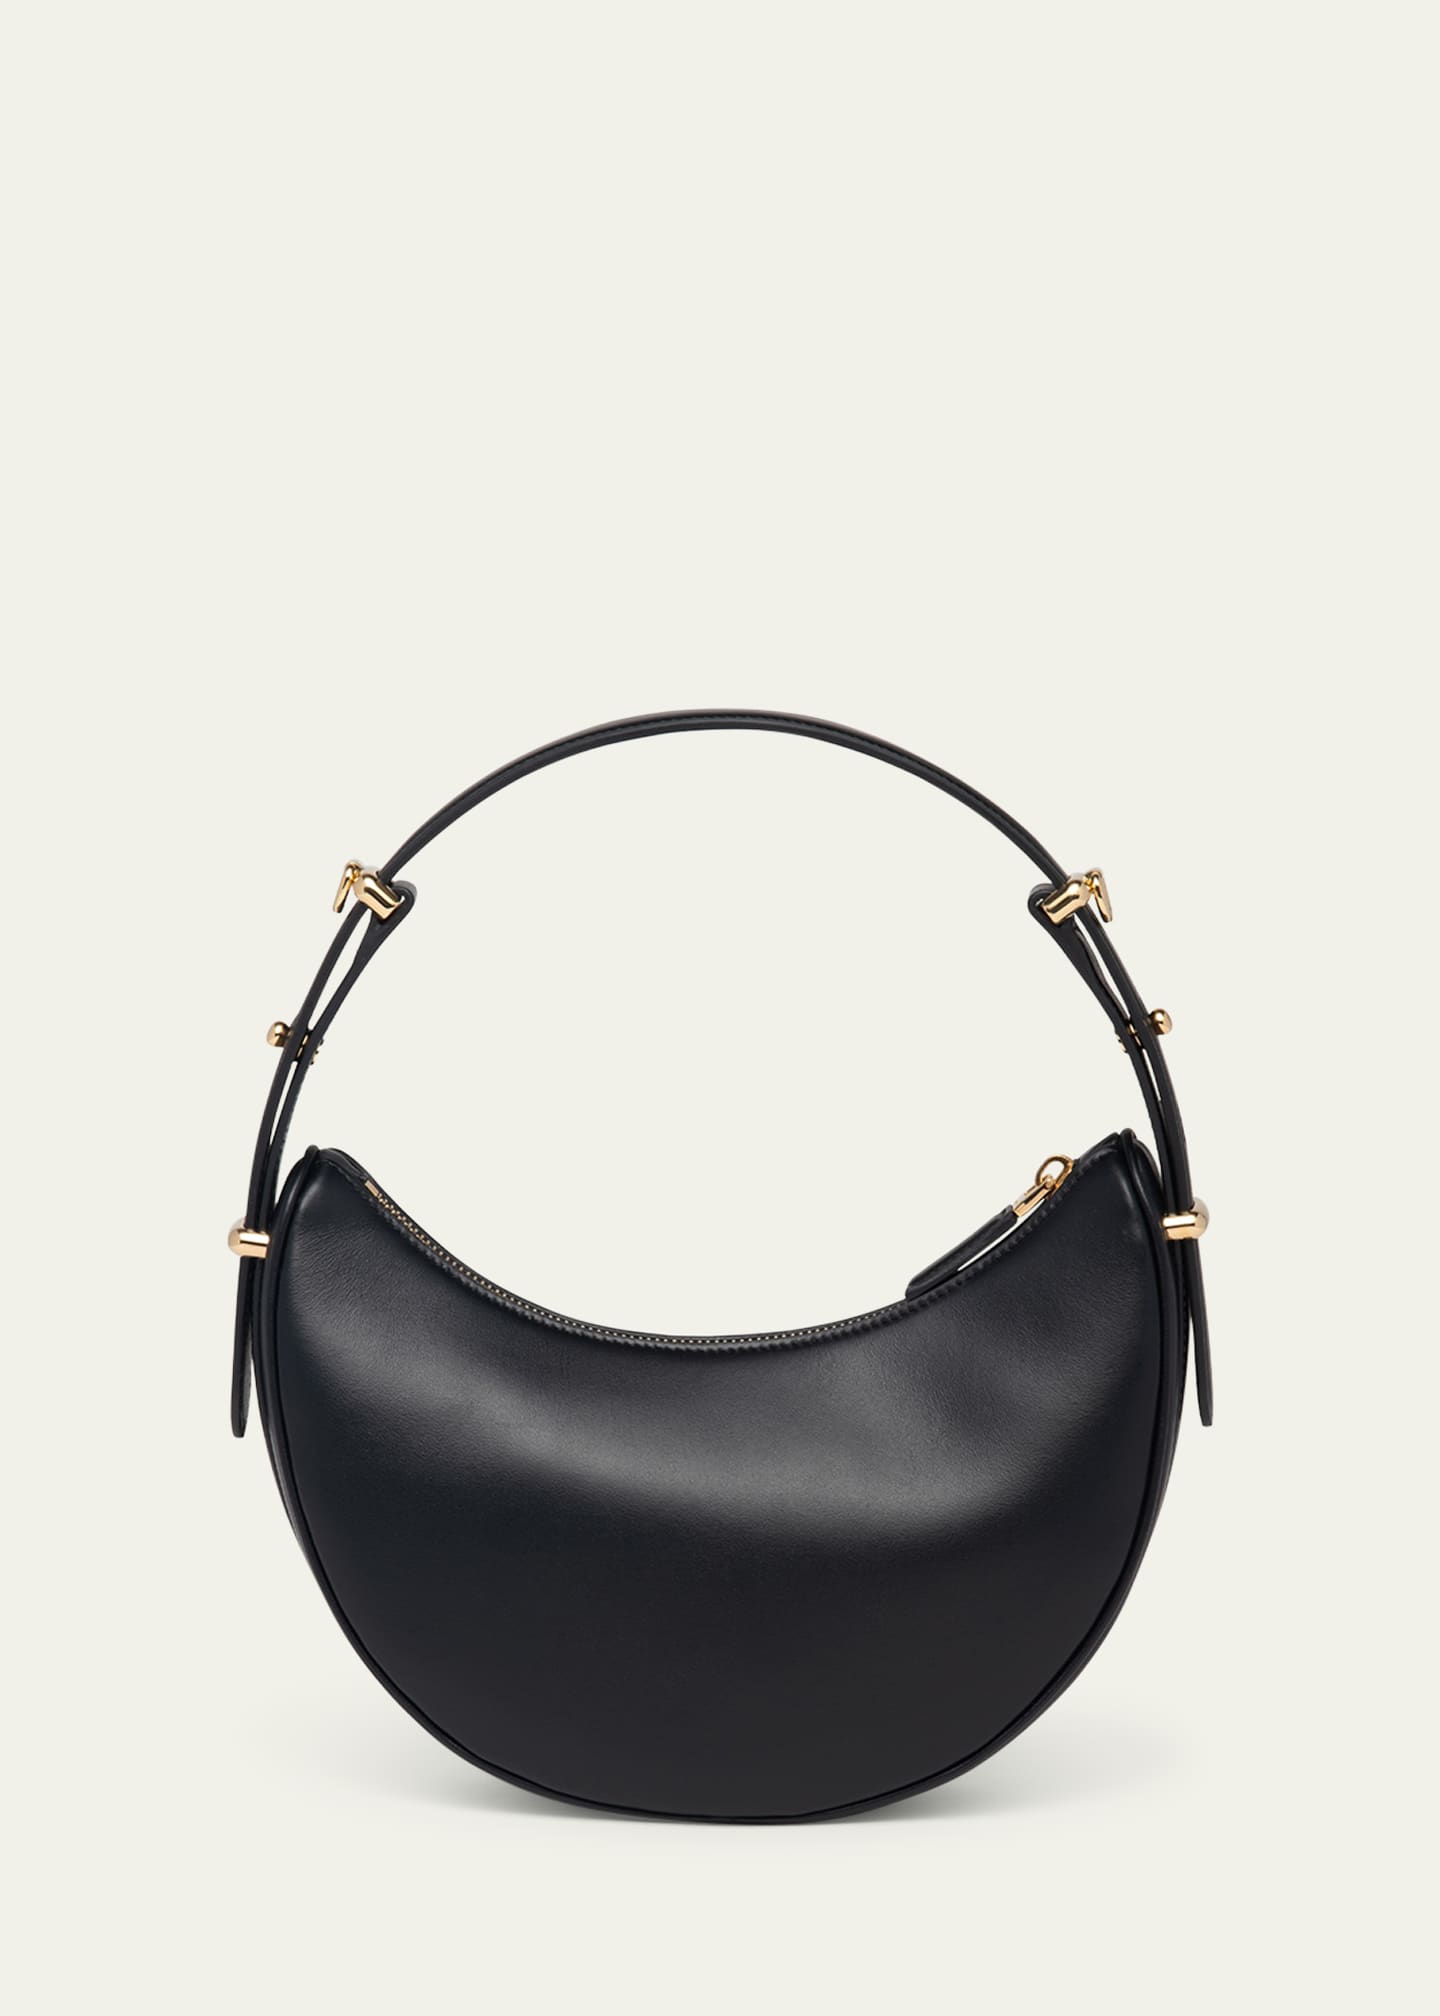 Prada Saffiano Leather Top-Handle Bag, Women, Mango